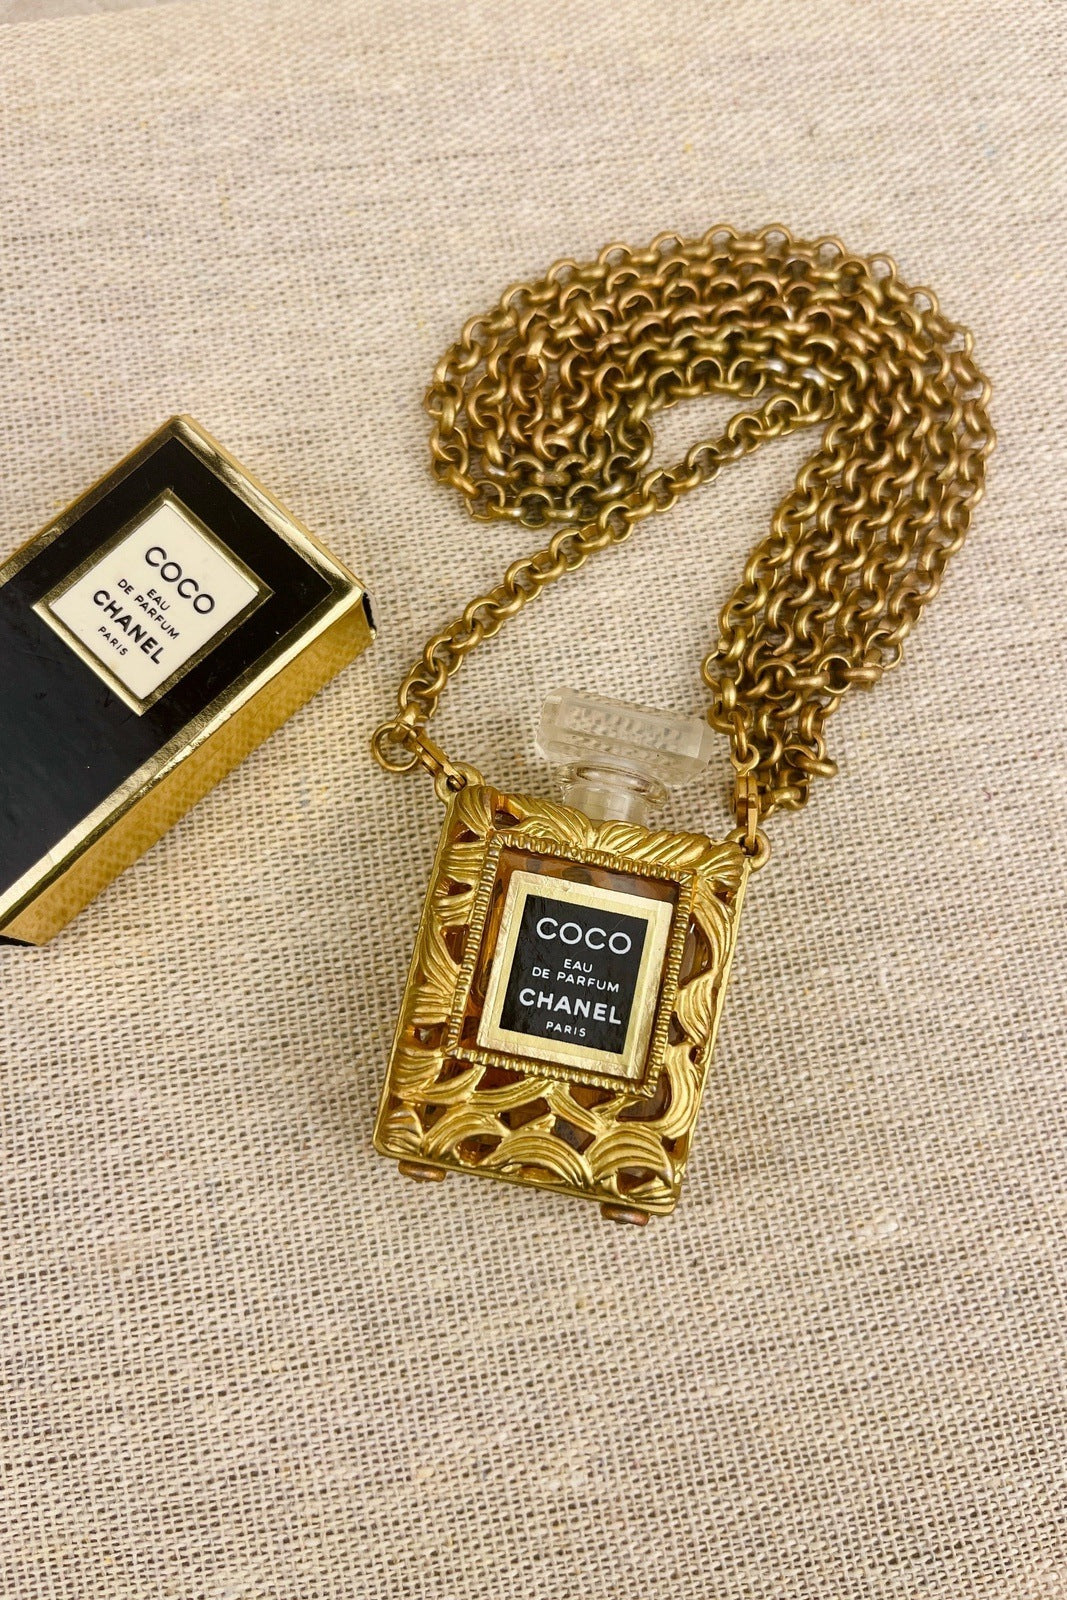 Chanel perfume case vintage necklace-CHANEL Perfume Bottle Gold